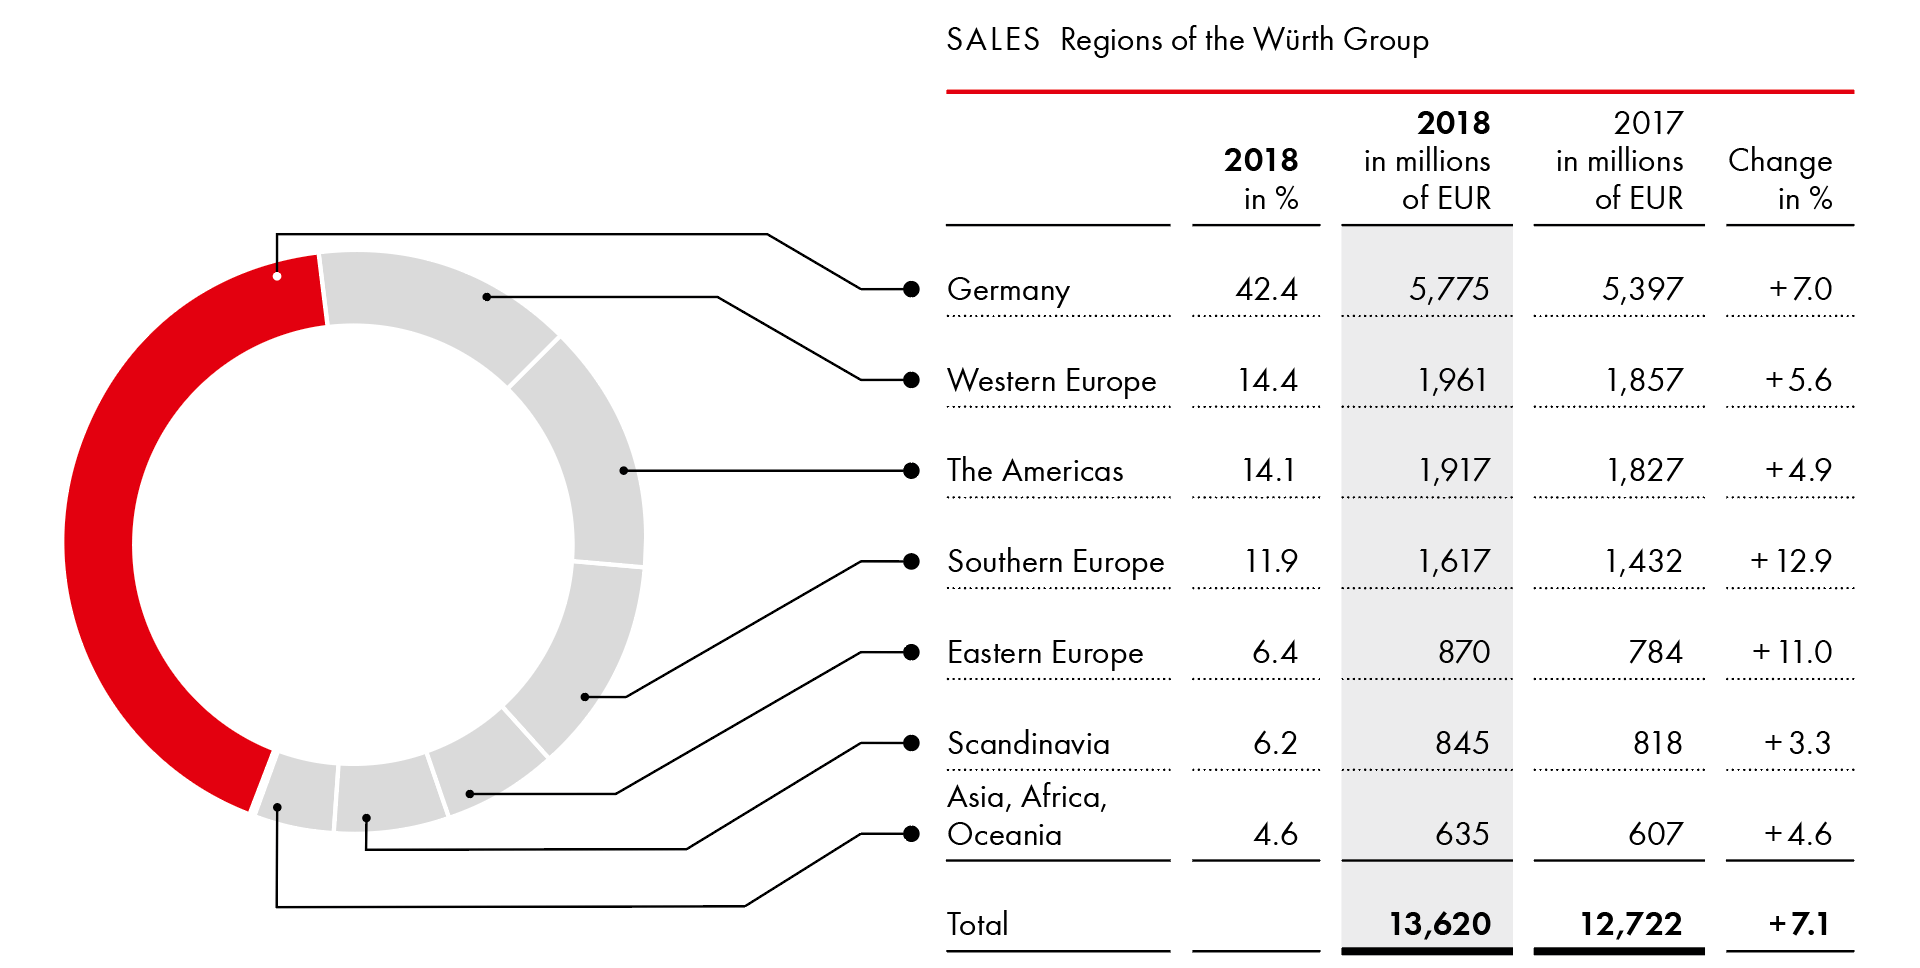 Sales by region